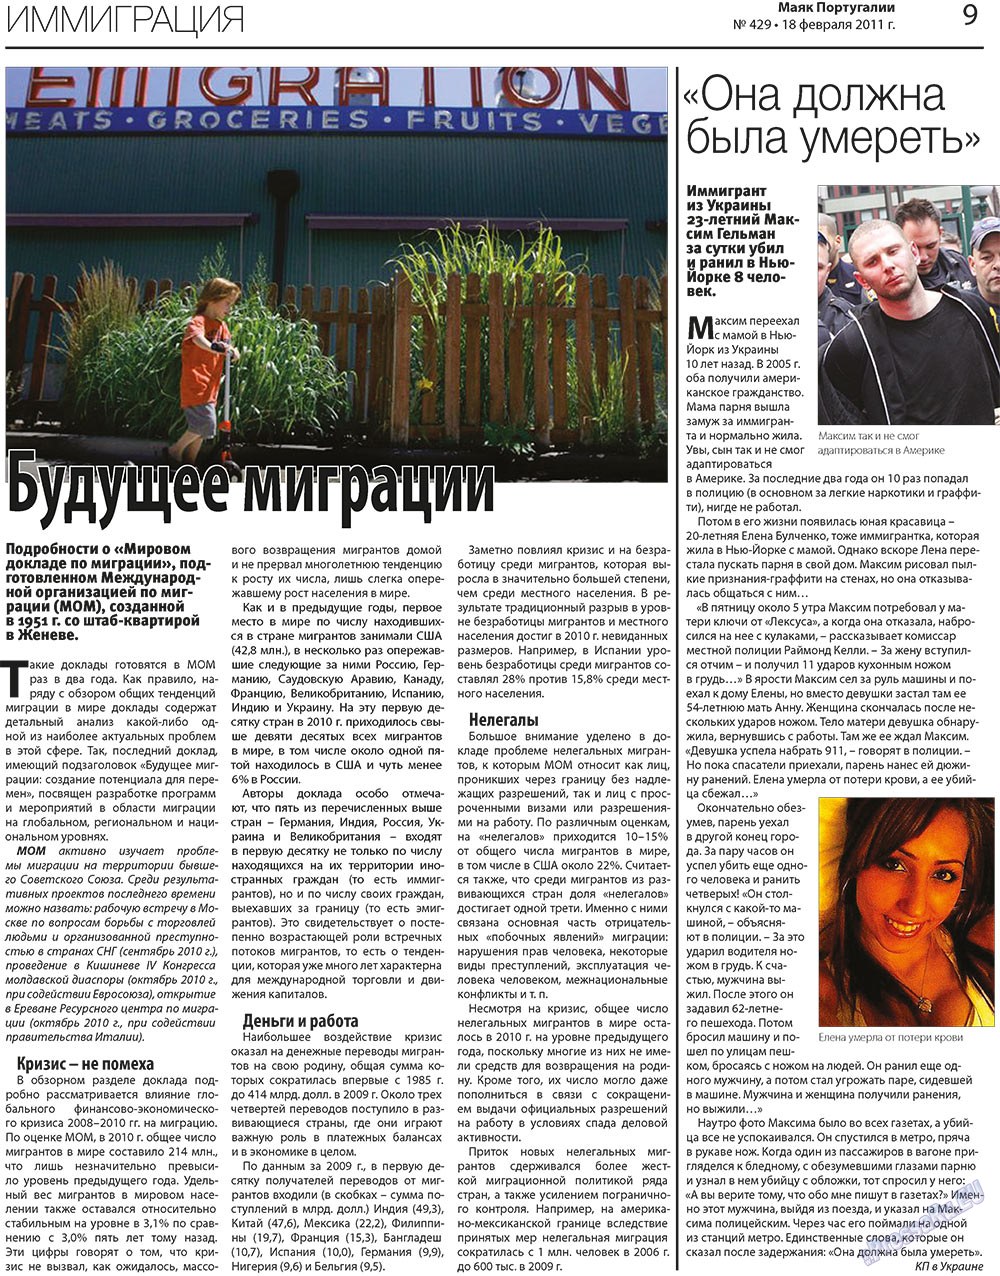 Маяк Португалии, газета. 2011 №429 стр.9